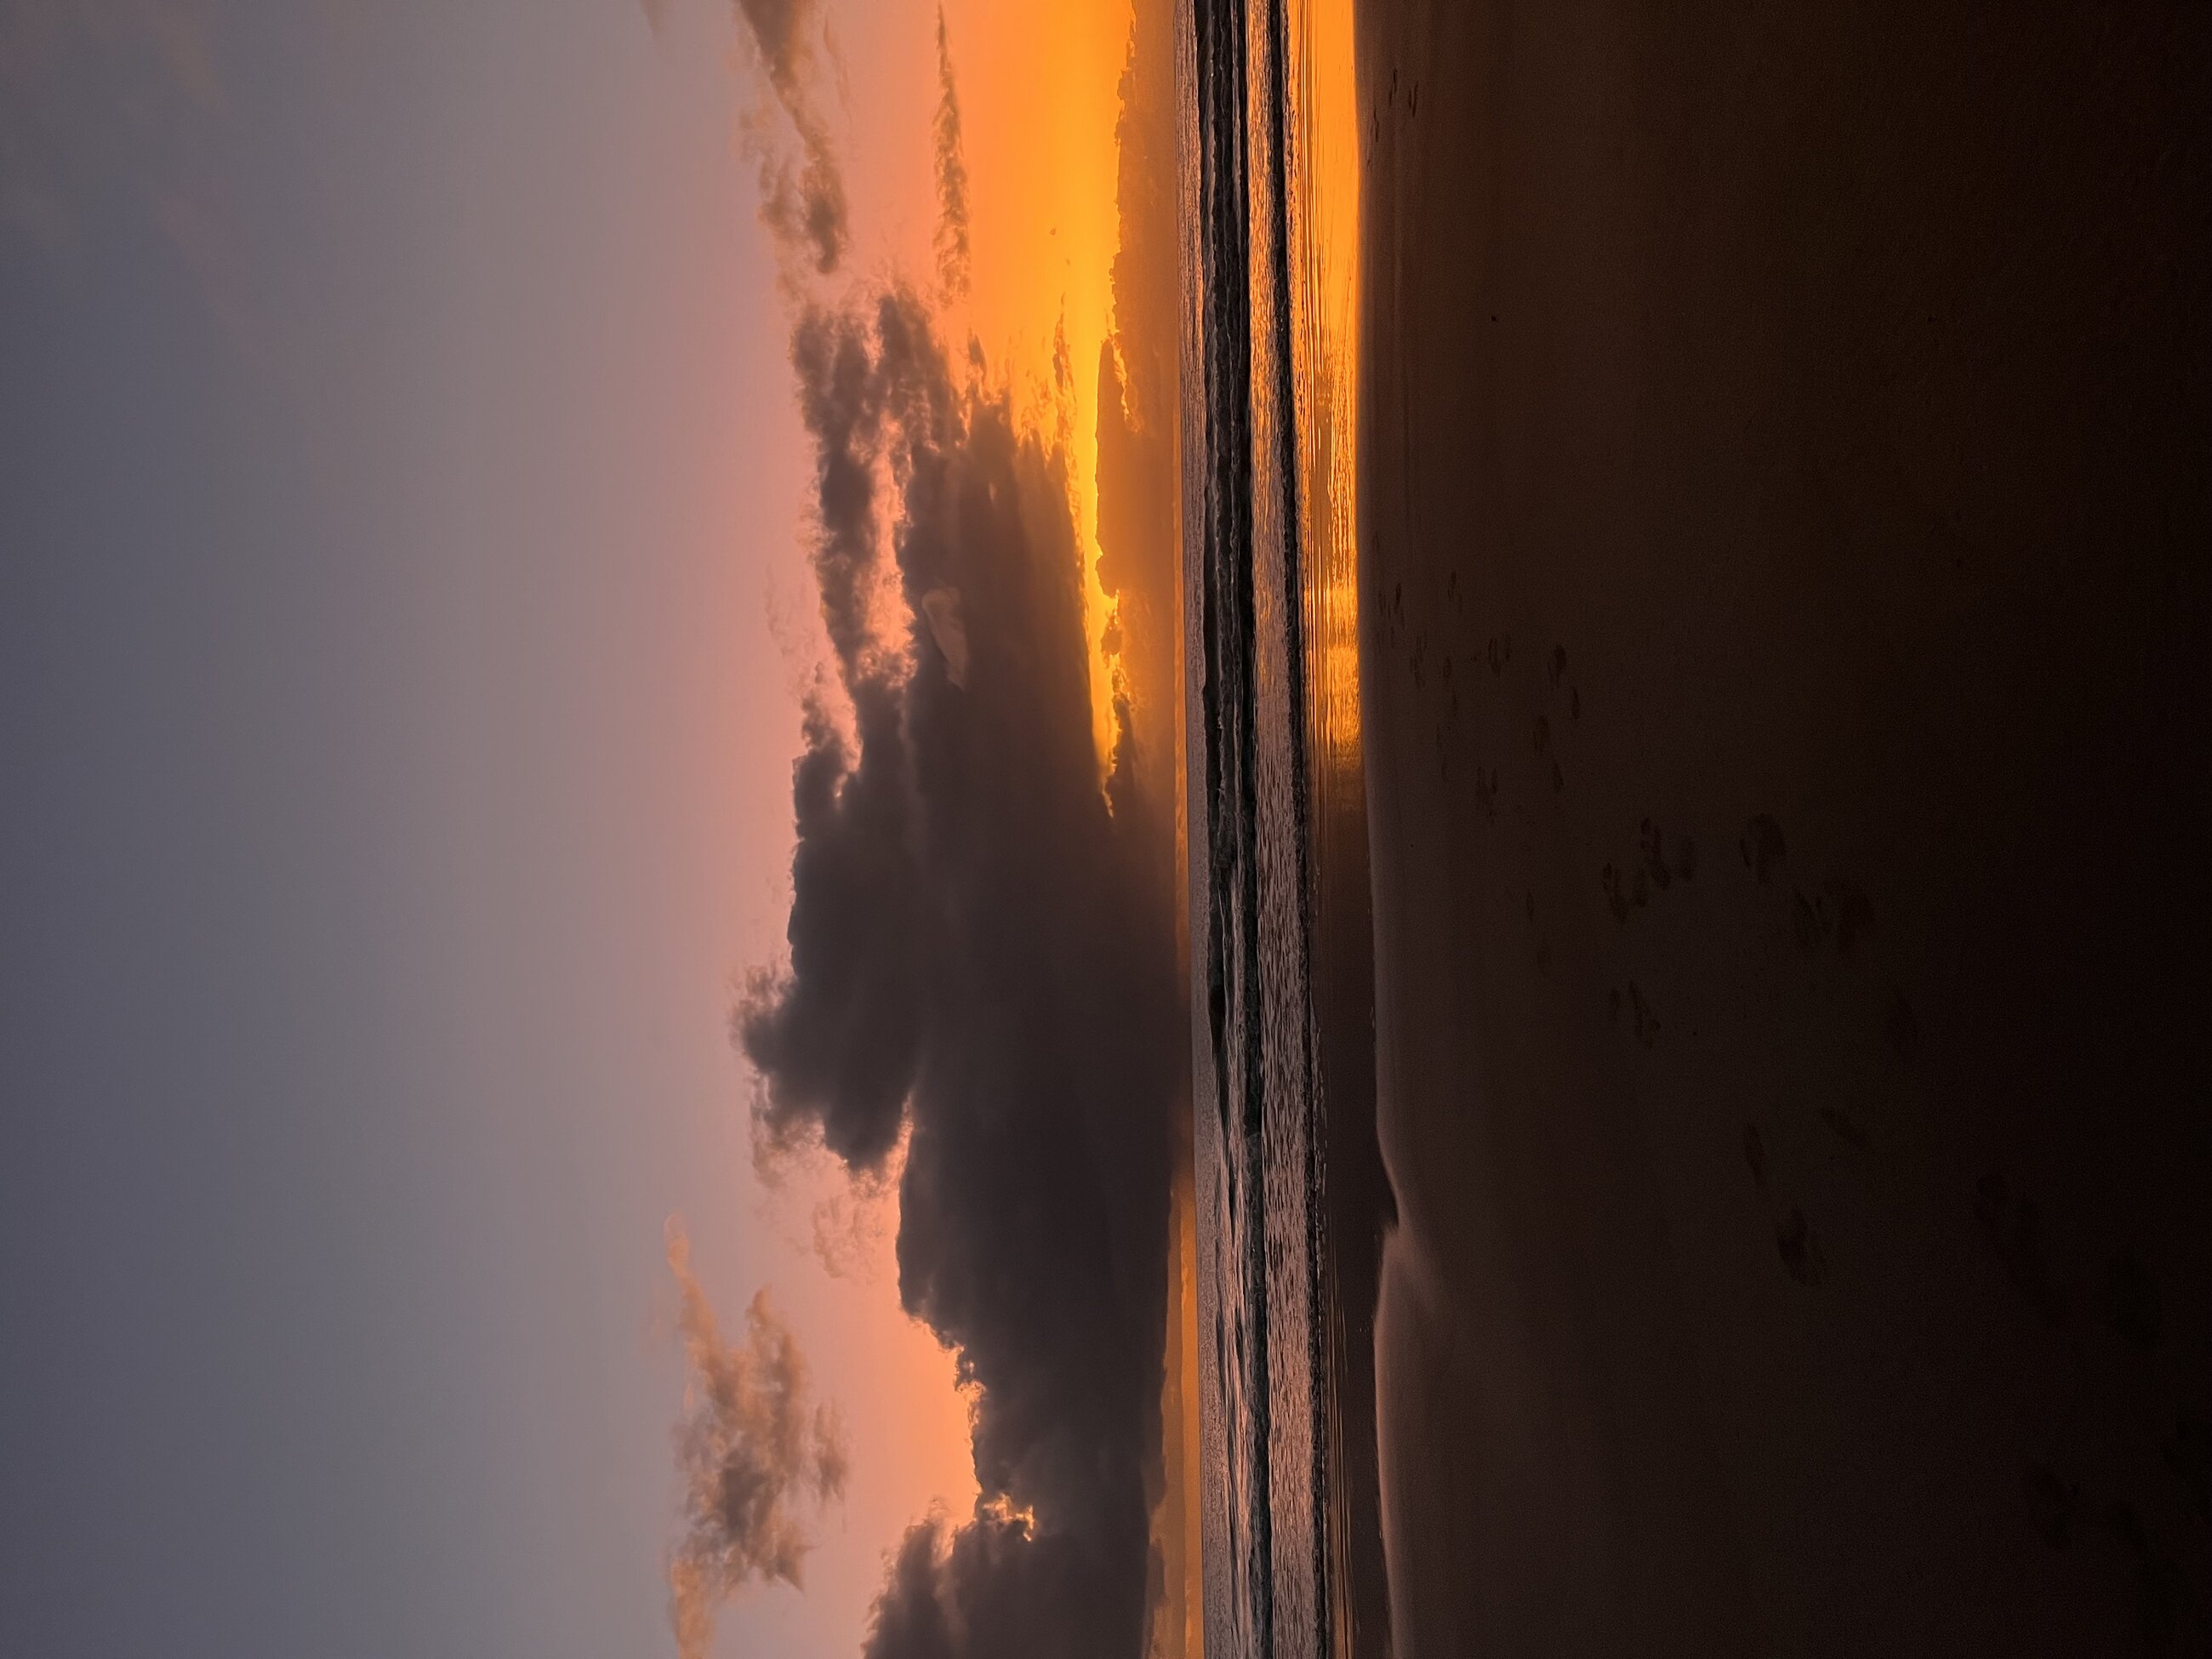 Port Douglas, Australia Sunrise